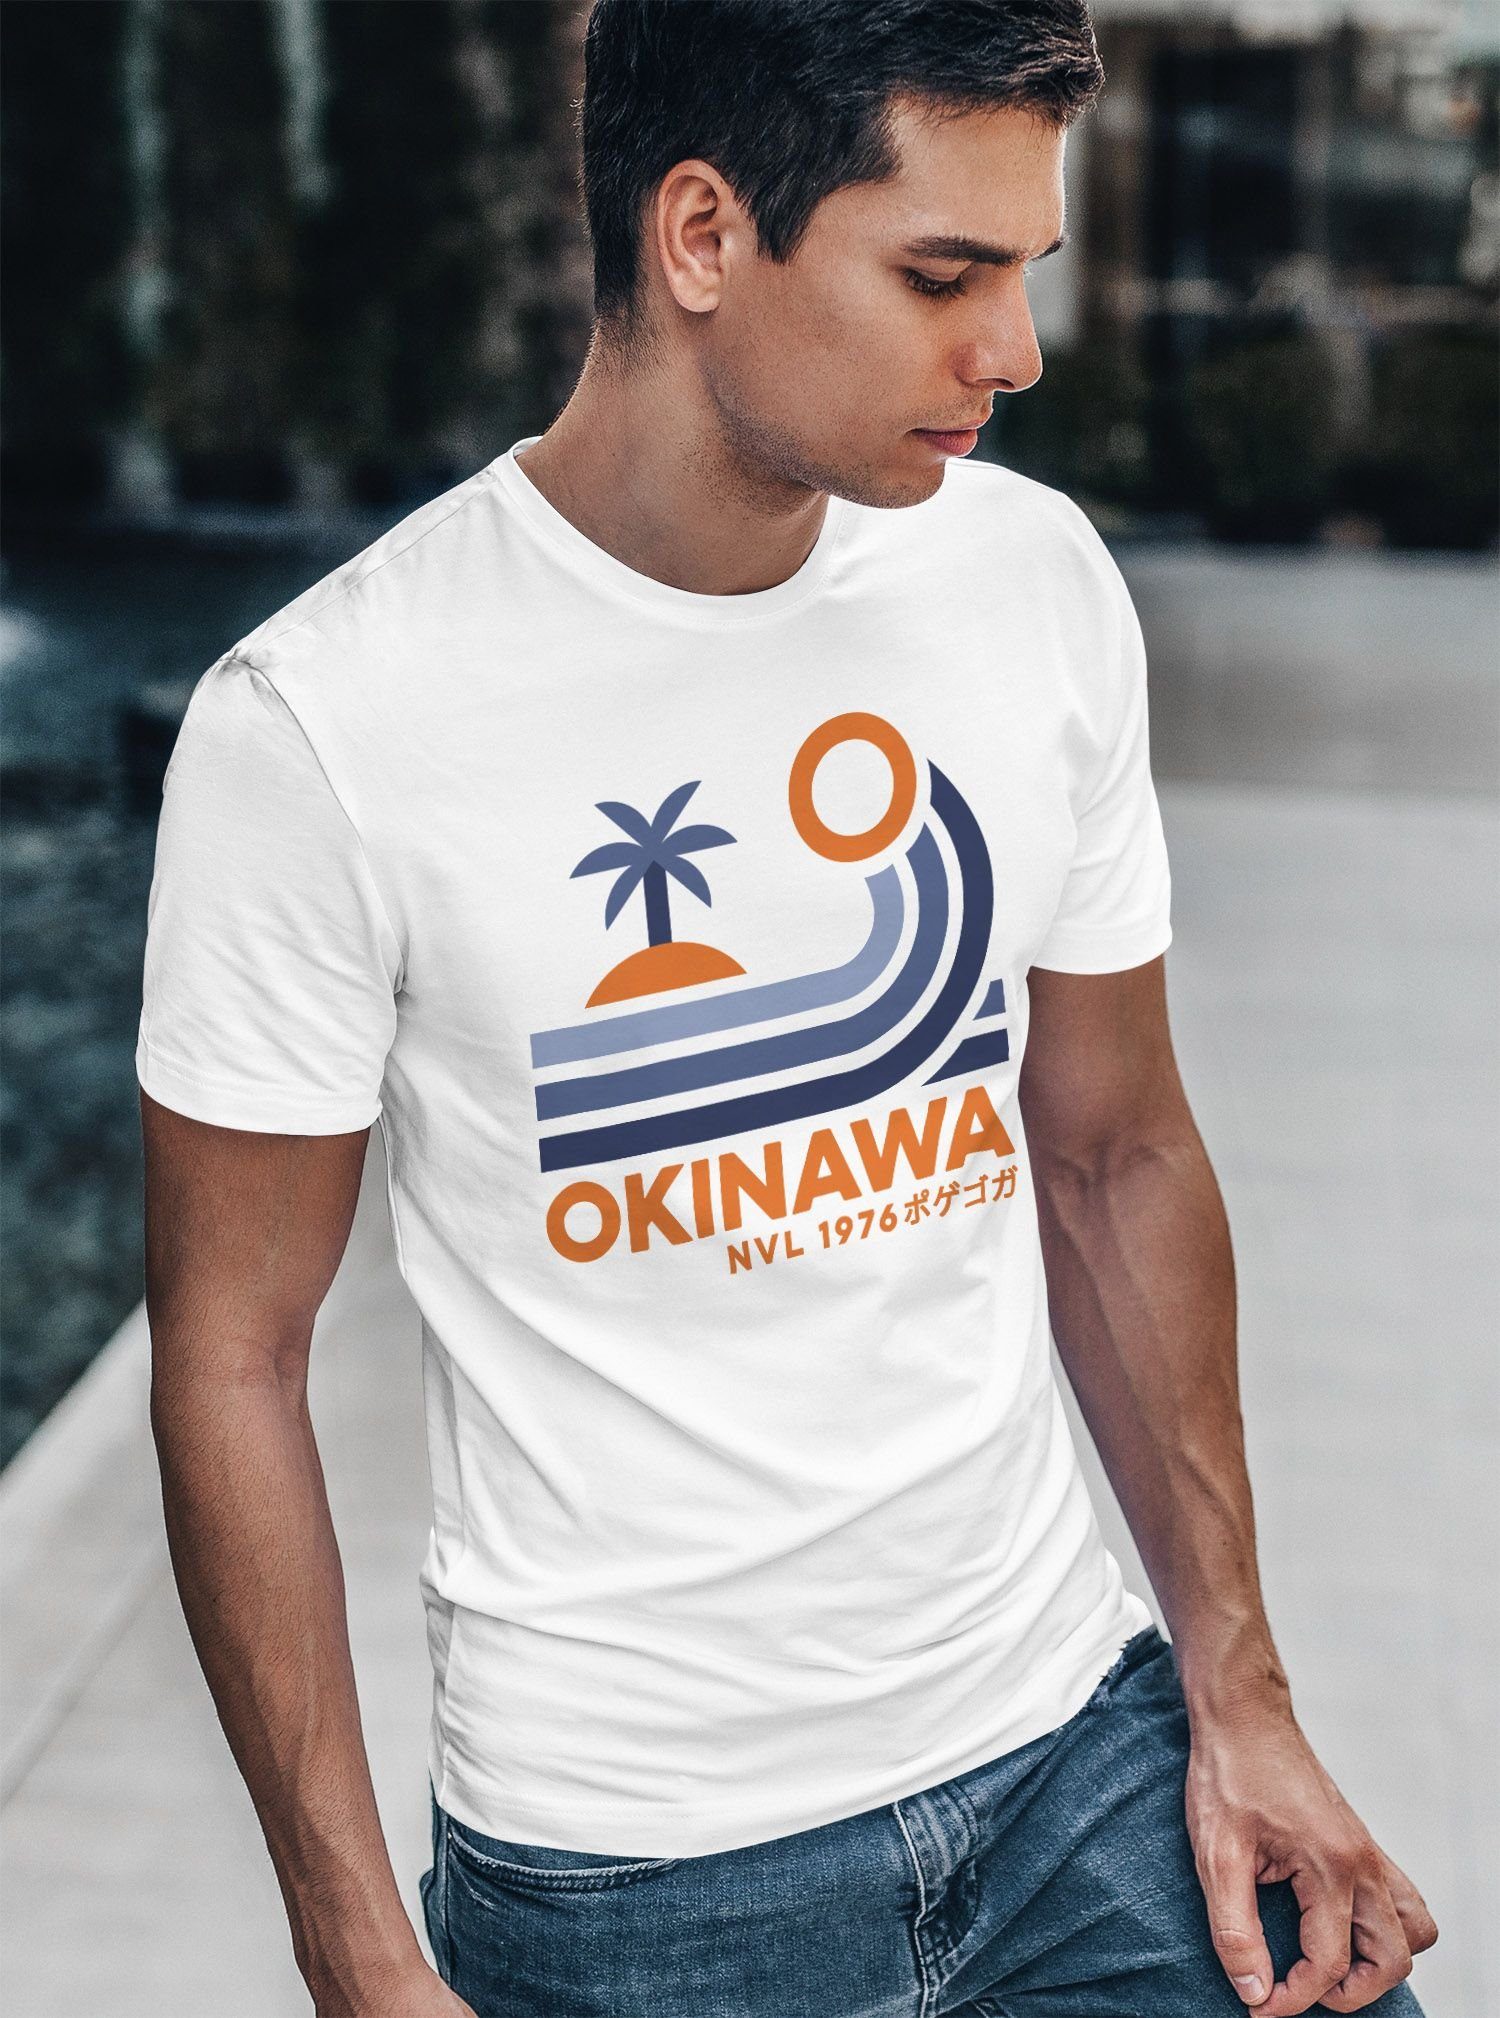 Fashion Streetstyle T-Shirt Print weiß Welle Print-Shirt Herren Retro mit Okinawa Schriftzug Japan Neverless® Neverless Palme